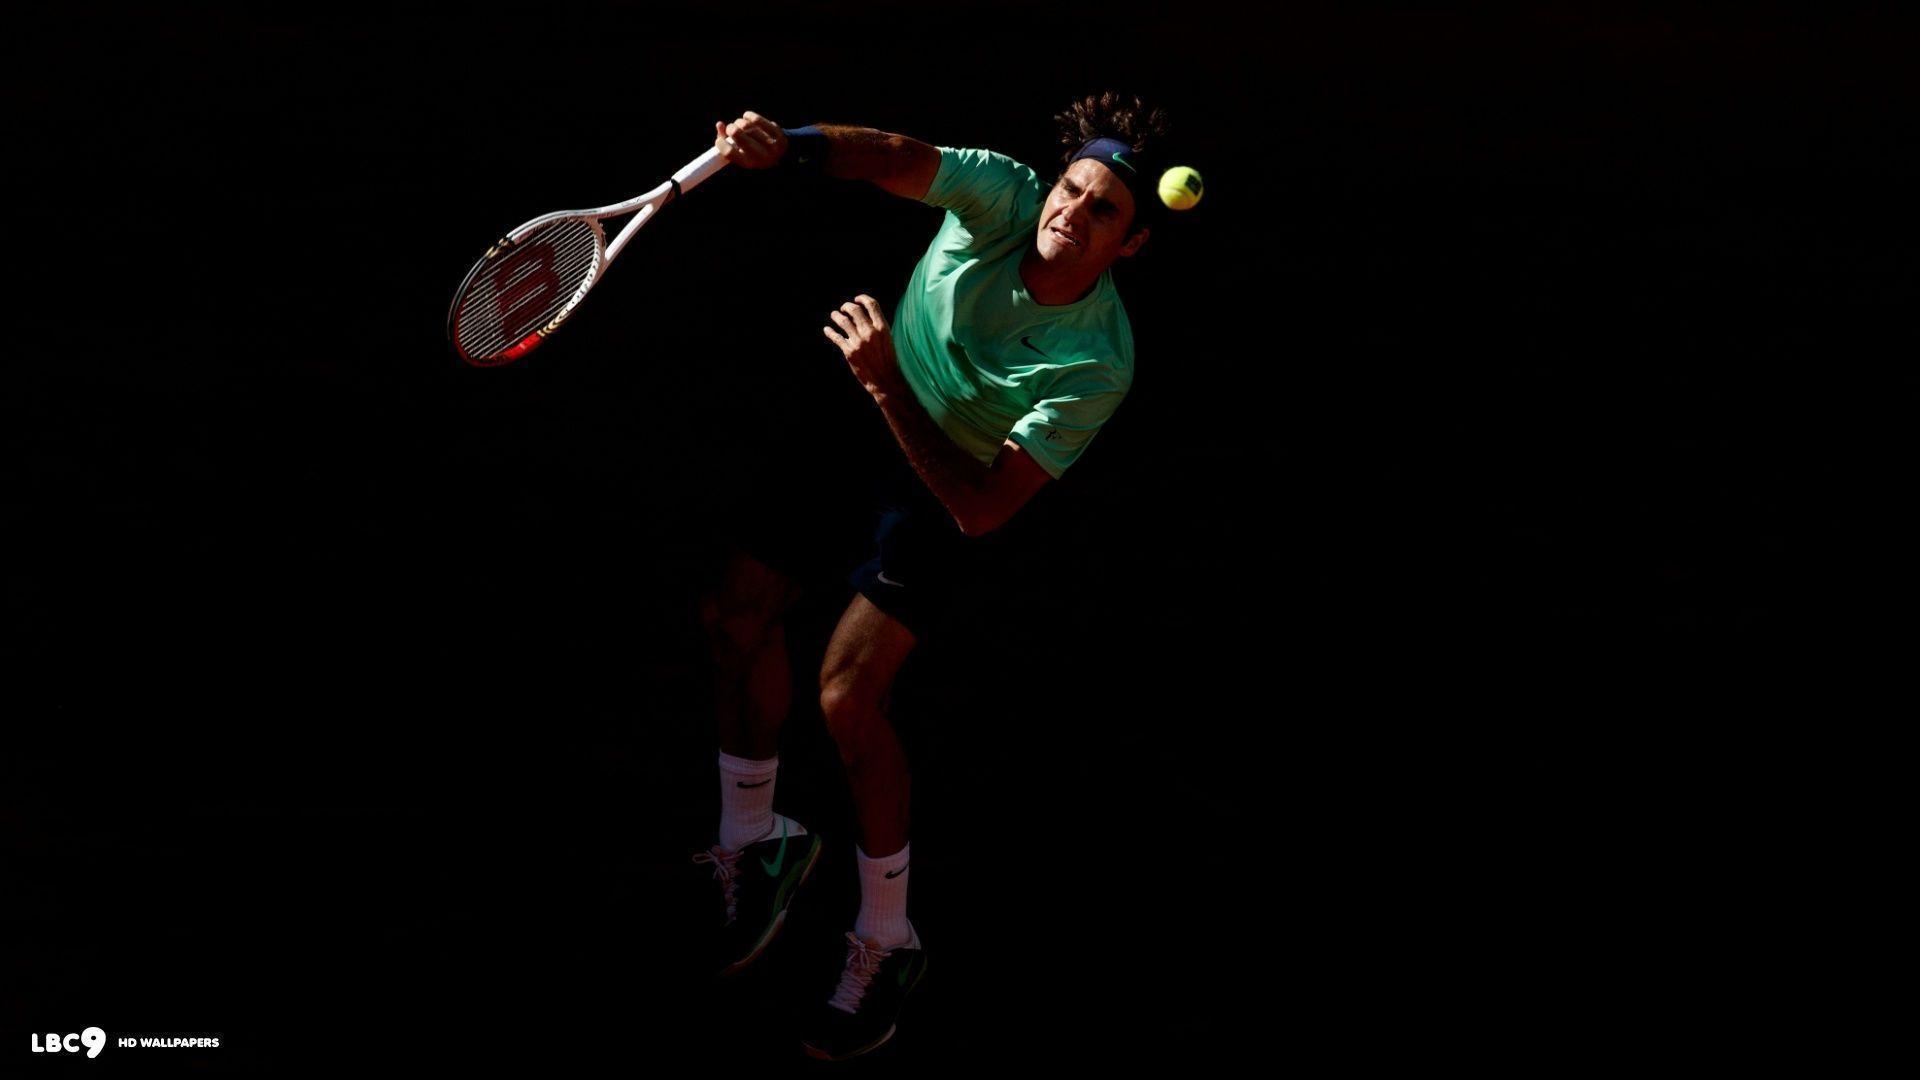 In Gallery: Roger Federer Wimbledon Wallpaper, 49 Roger Federer